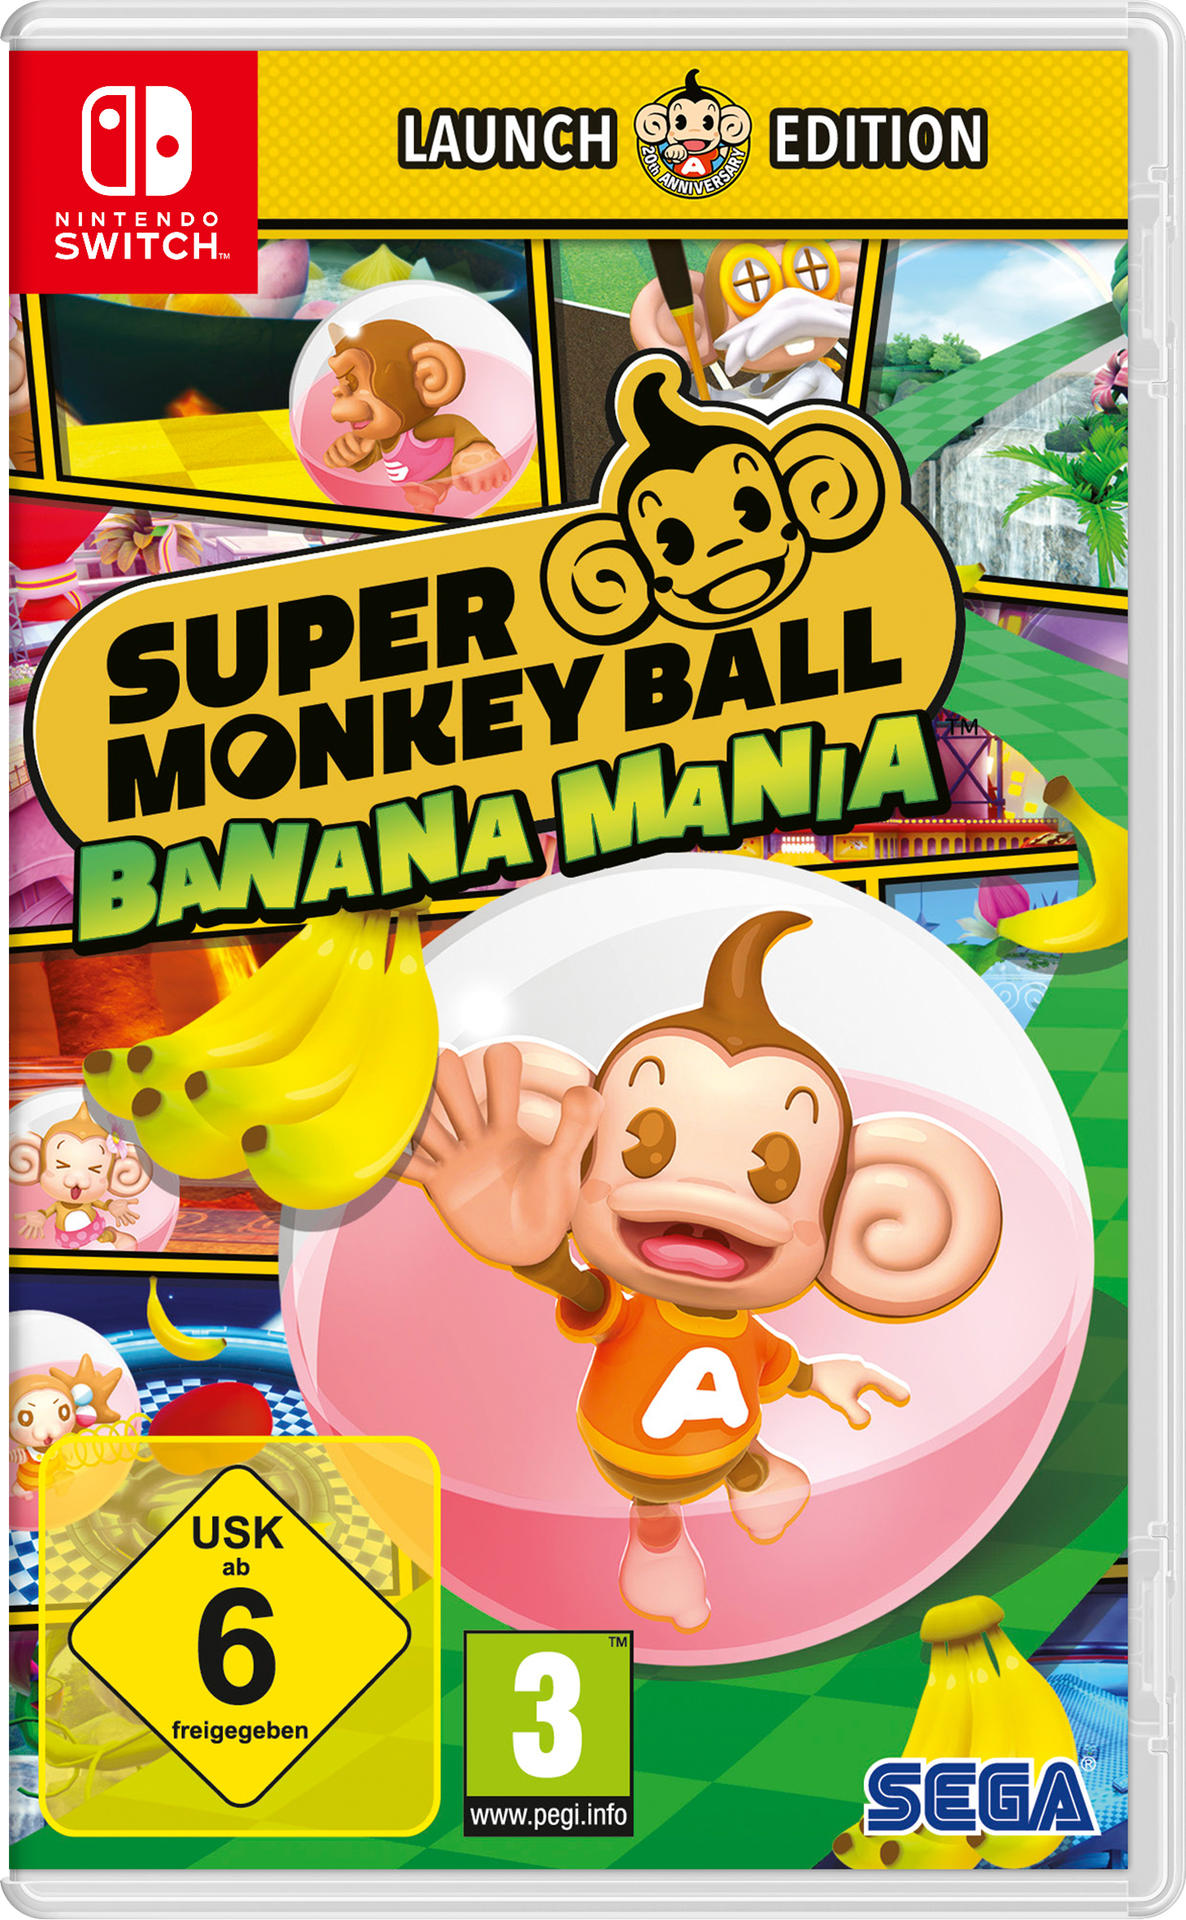 SW SUPER MONKEY BALL BANANA EDITION MANIA - [Nintendo Switch] LAUNCH